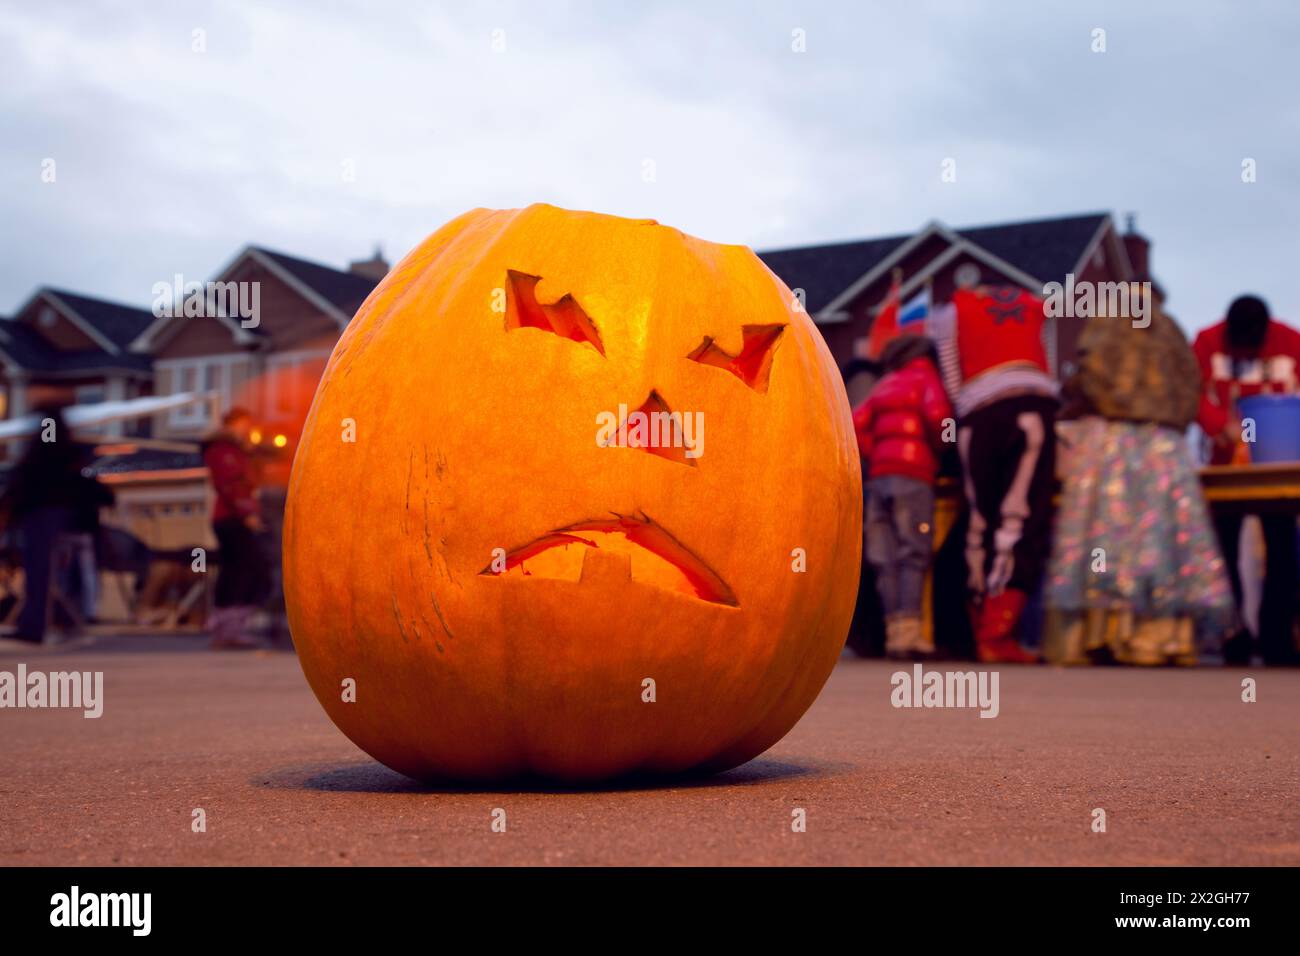 Scary Jack O'Lantern. Halloween pumpkin. Halloween celebrating. Behind pumpkin crowd of people Stock Photo